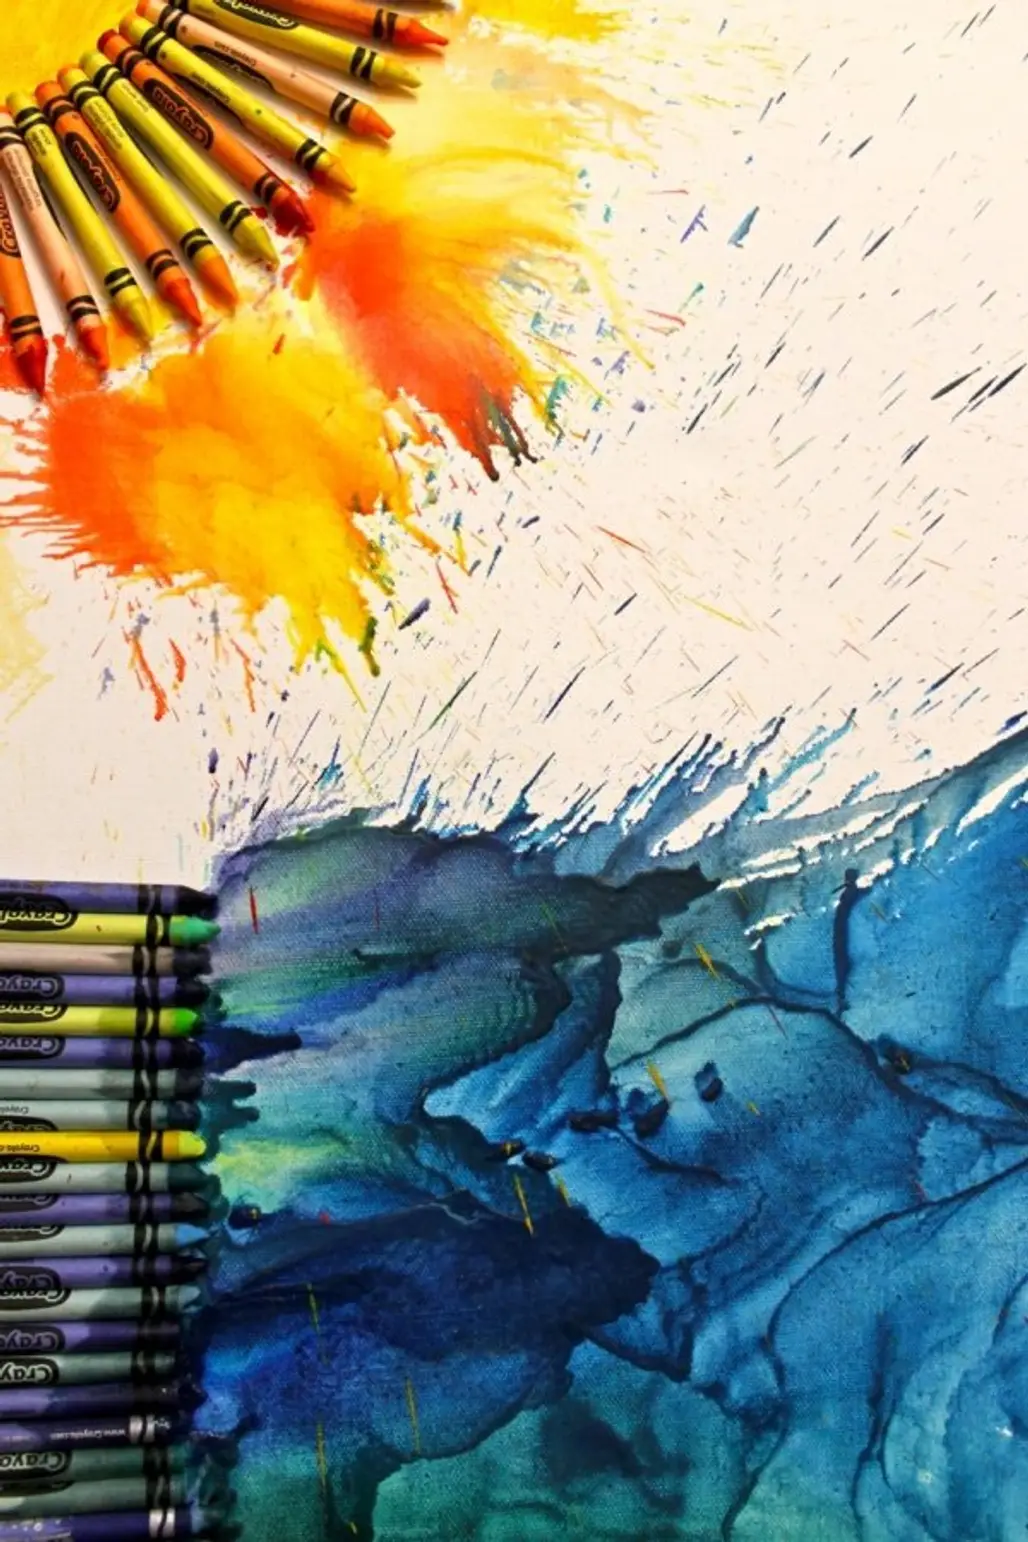 Cool Melted Crayon Art Ideas!! ♥ - Arts, Crafts & Ideas | Facebook